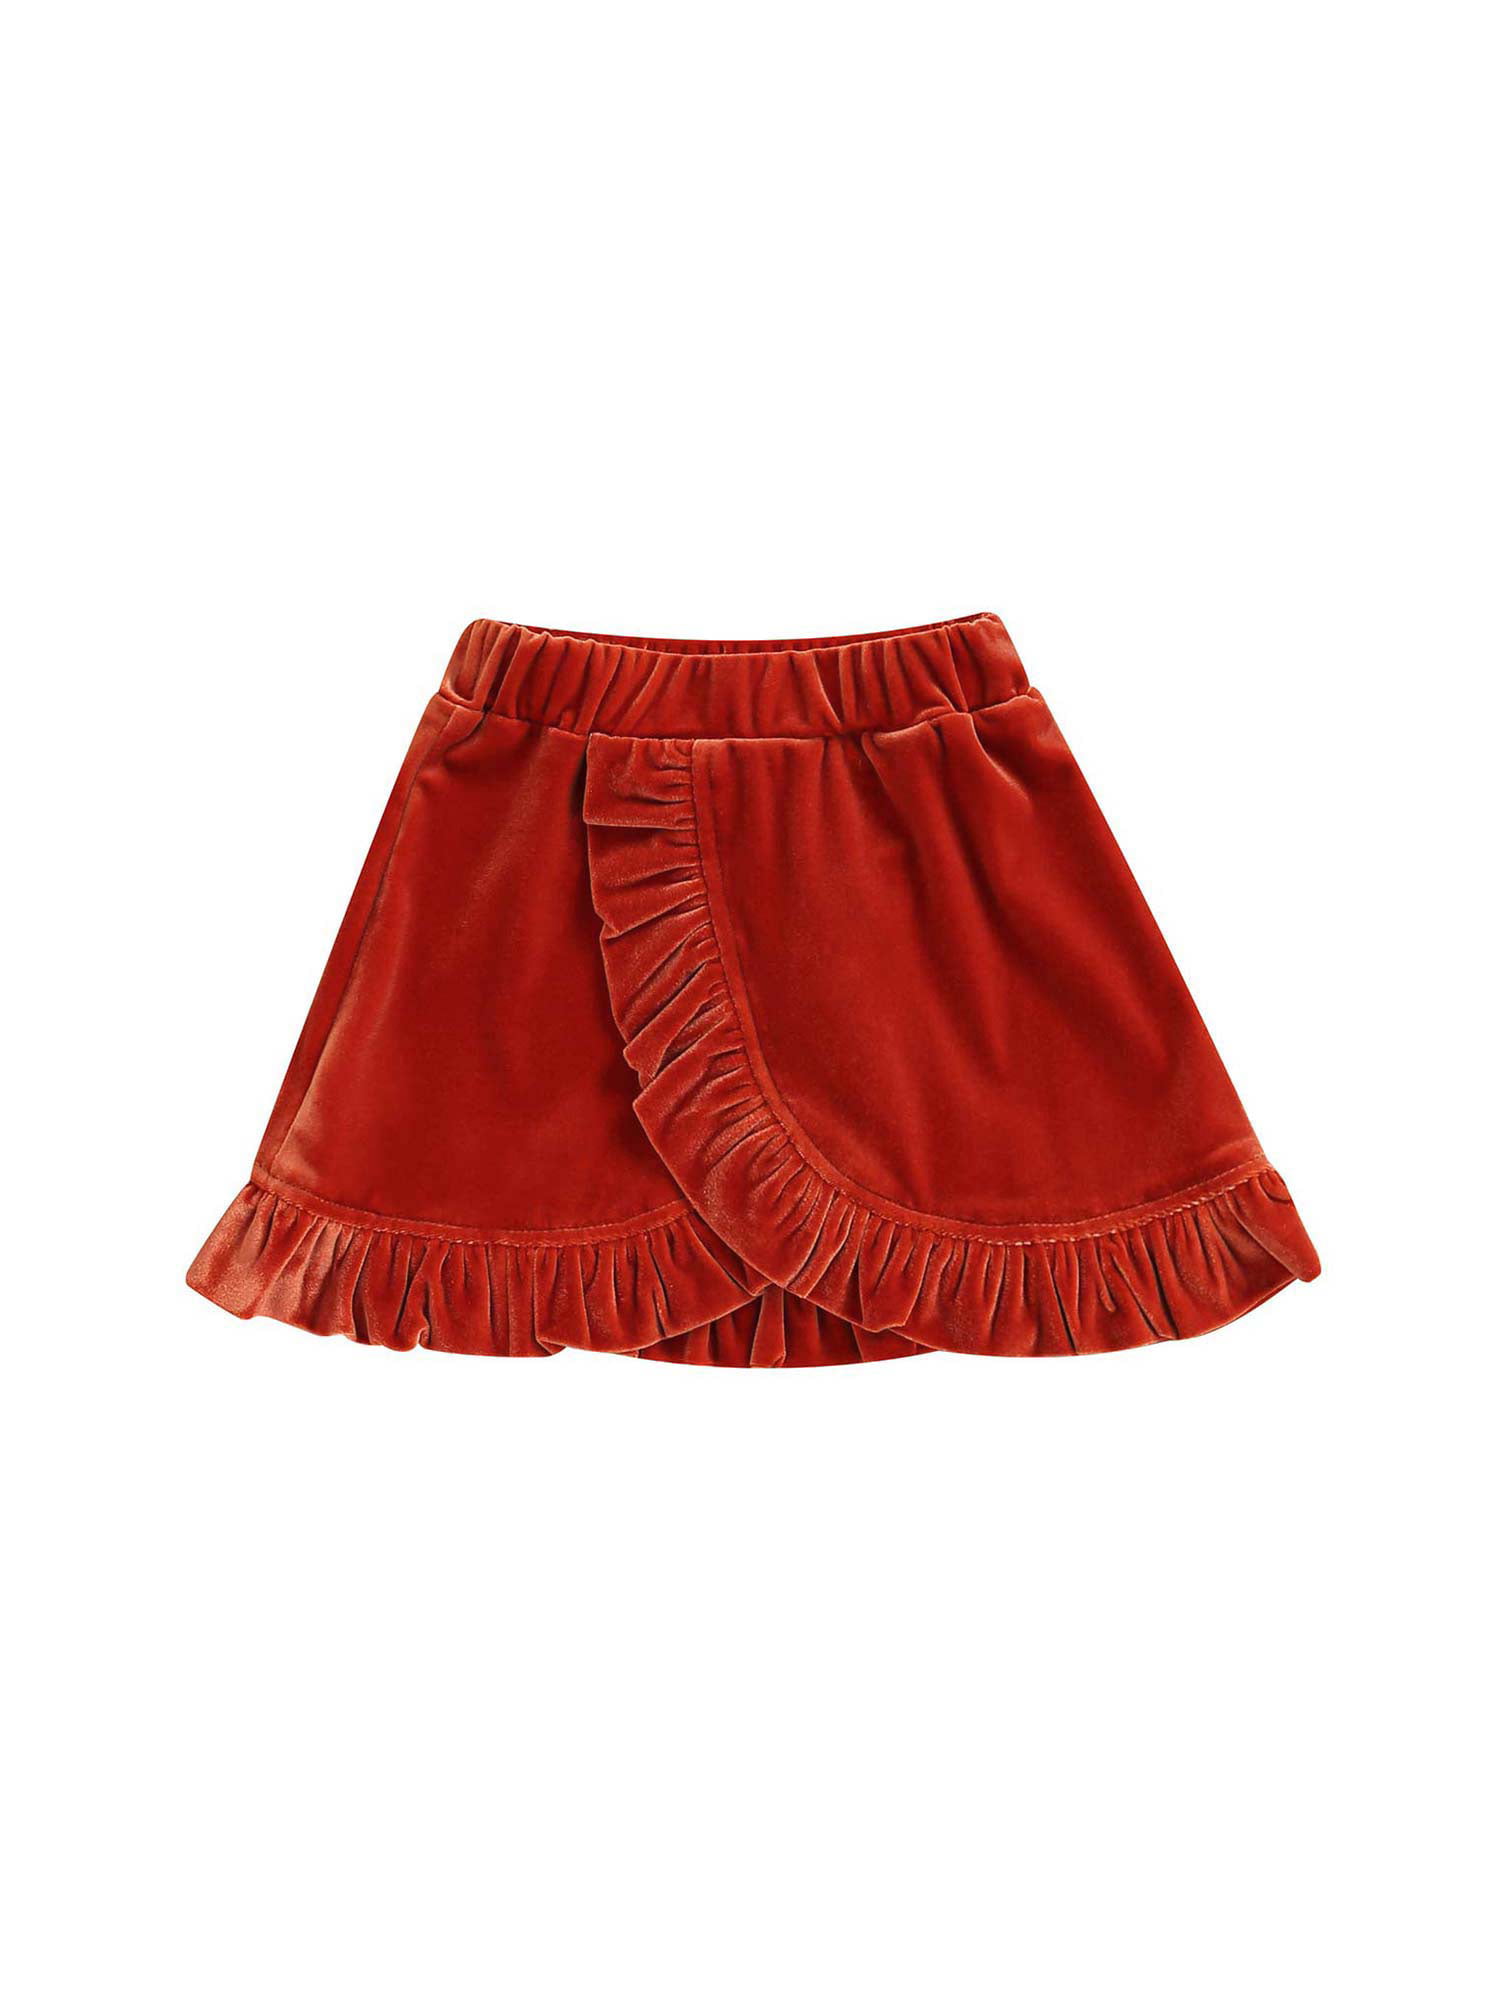 365 Kids Garanimals Girls' Velour Skirt with Bow Elastic Waist Cute Blush 6 7 8 